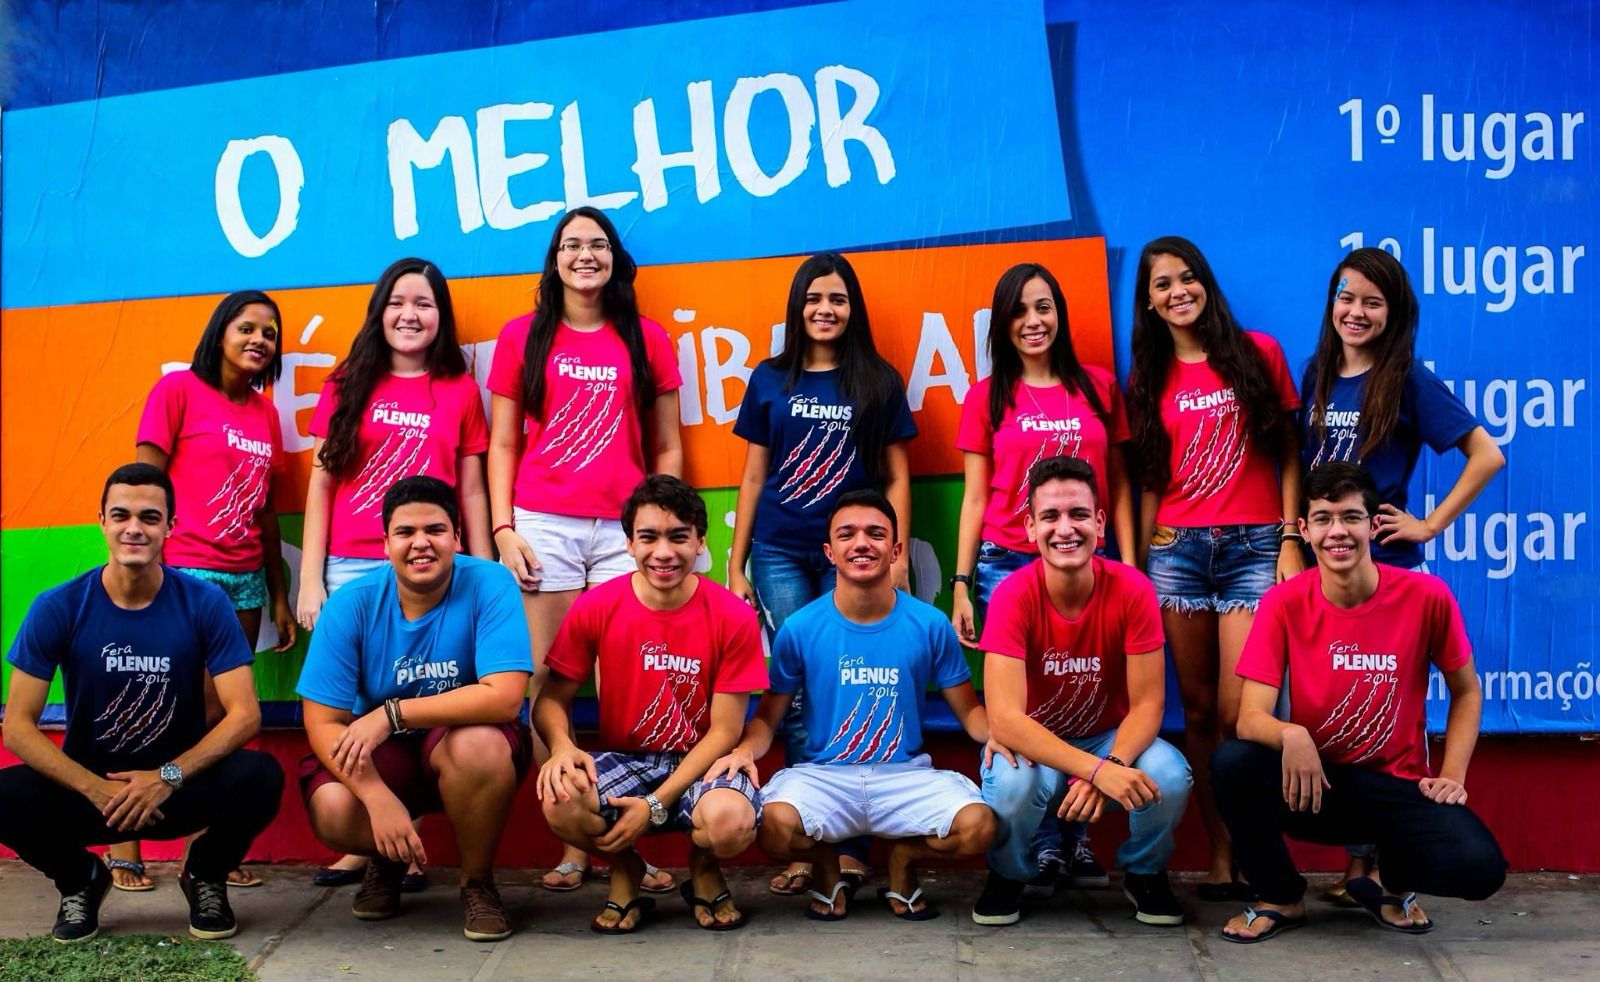 Plenus entre as 6 melhores escolas particulares de Pernambuco